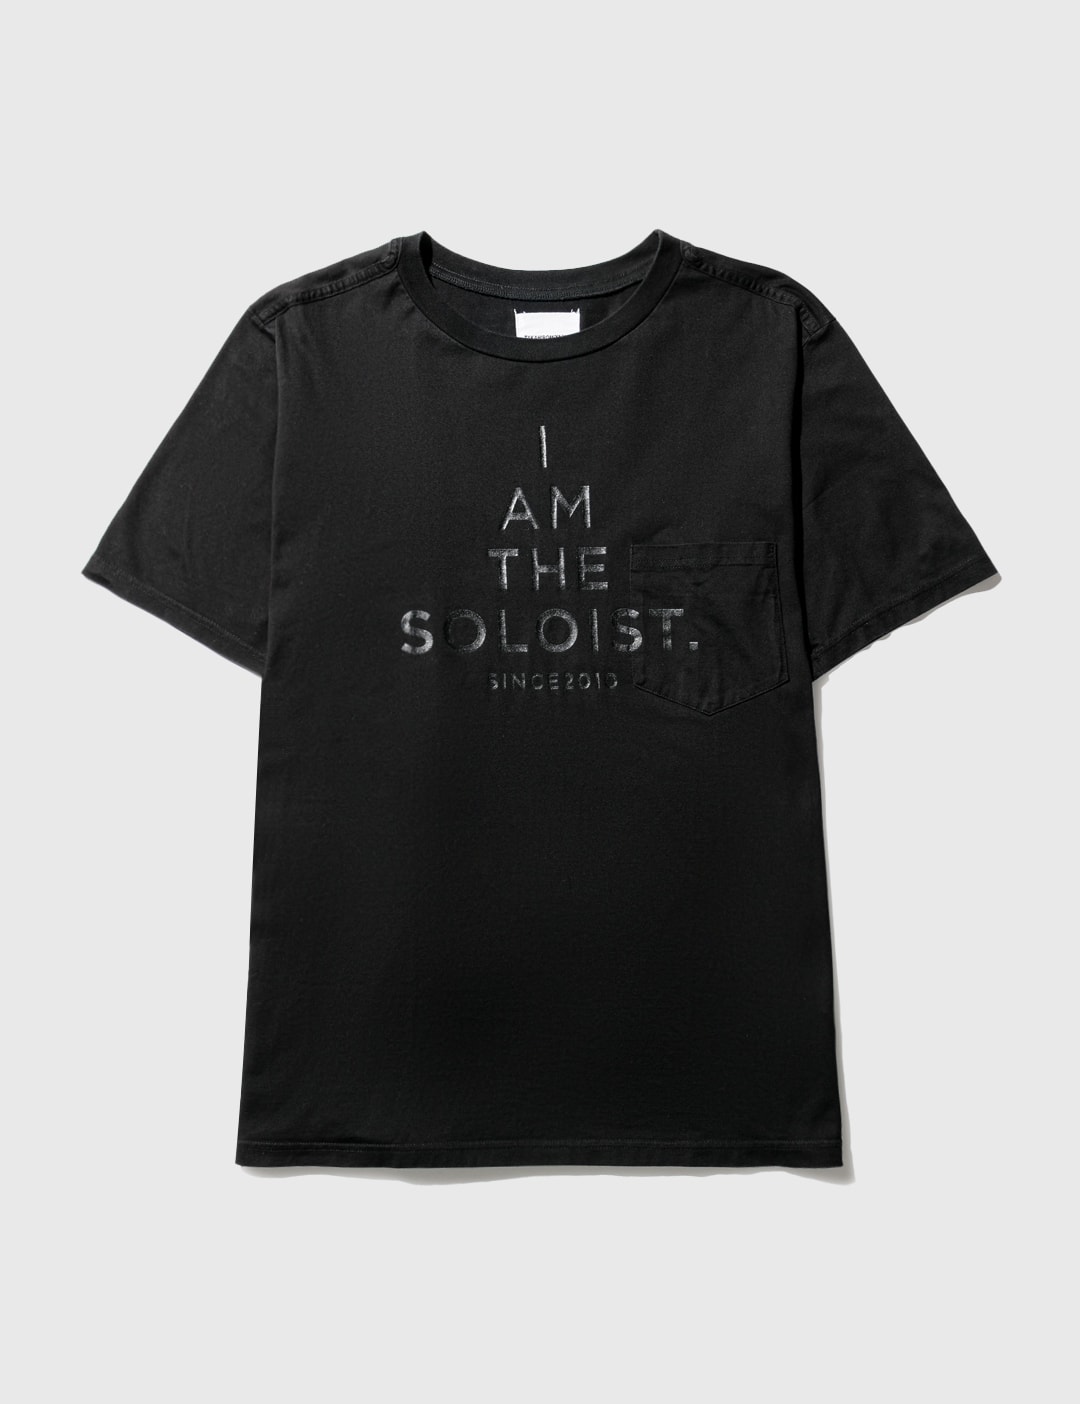 Takahiromiyashita Thesoloist - I AM THE SOLOIST T-shirt | HBX ...